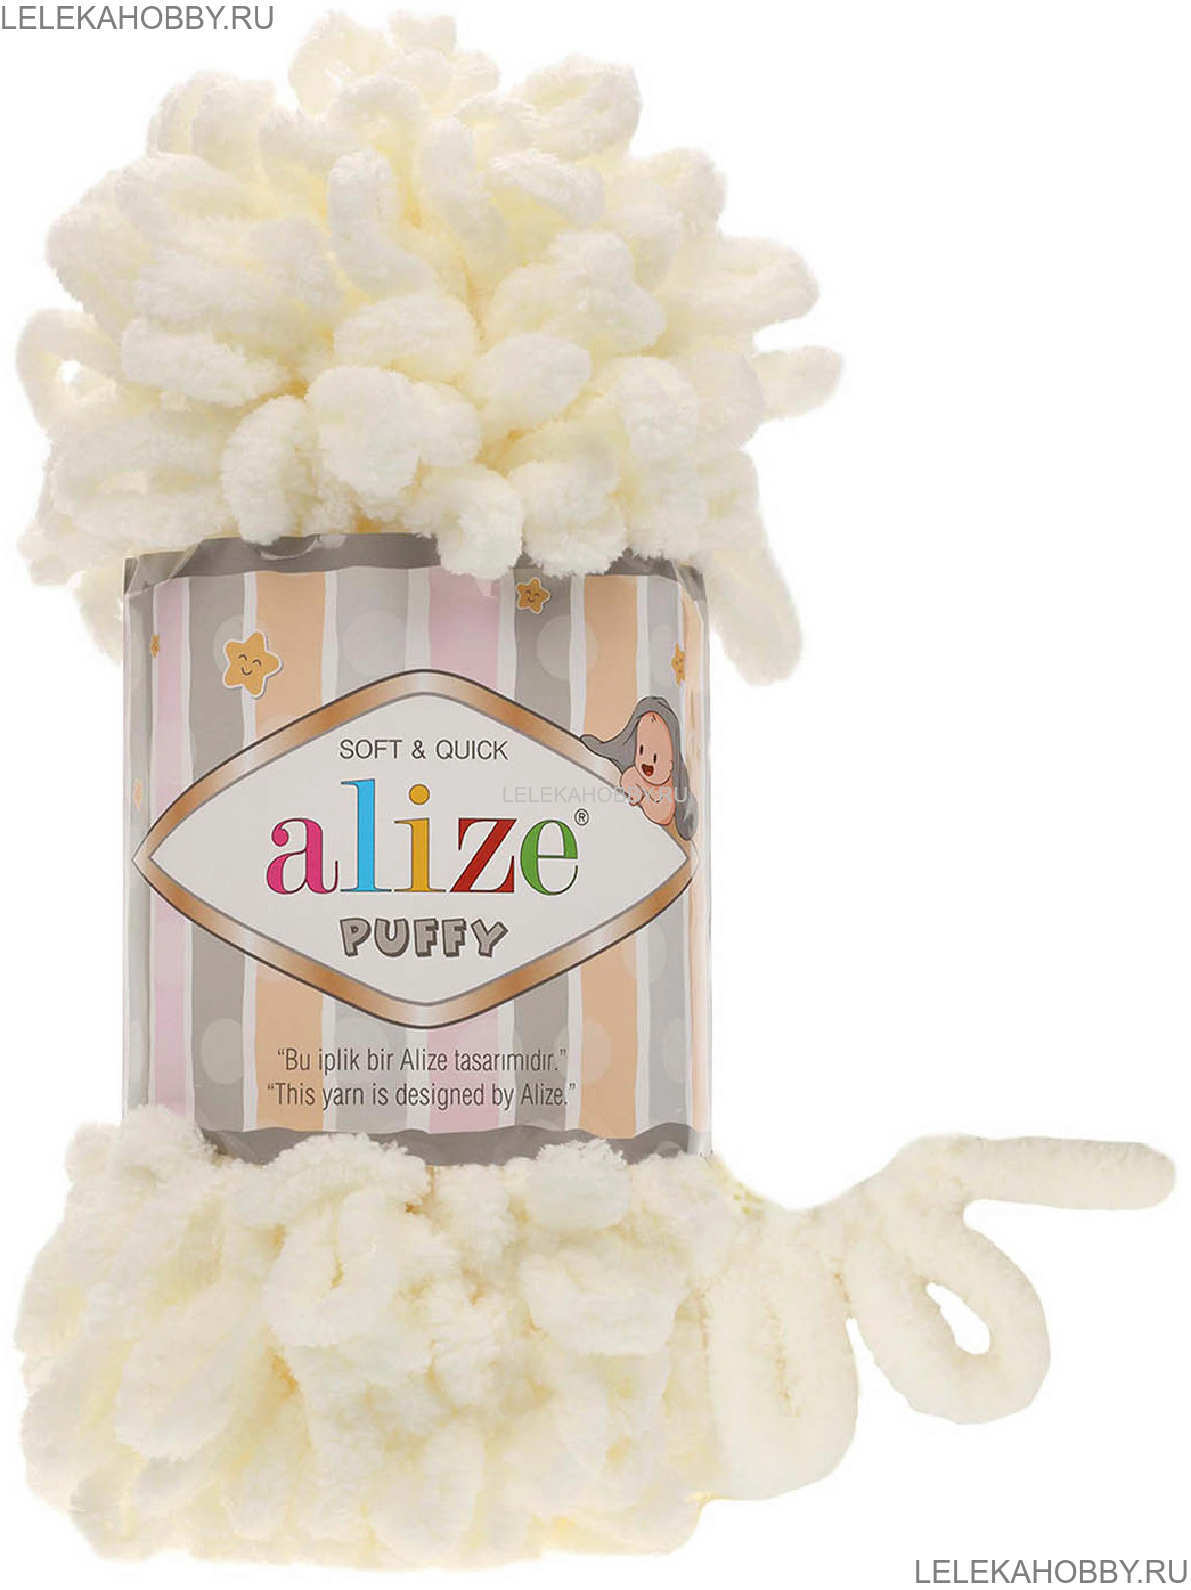 Пряжа Alize Puffy молочный (62), 100%микрополиэстер, 9м, 100г 151₽